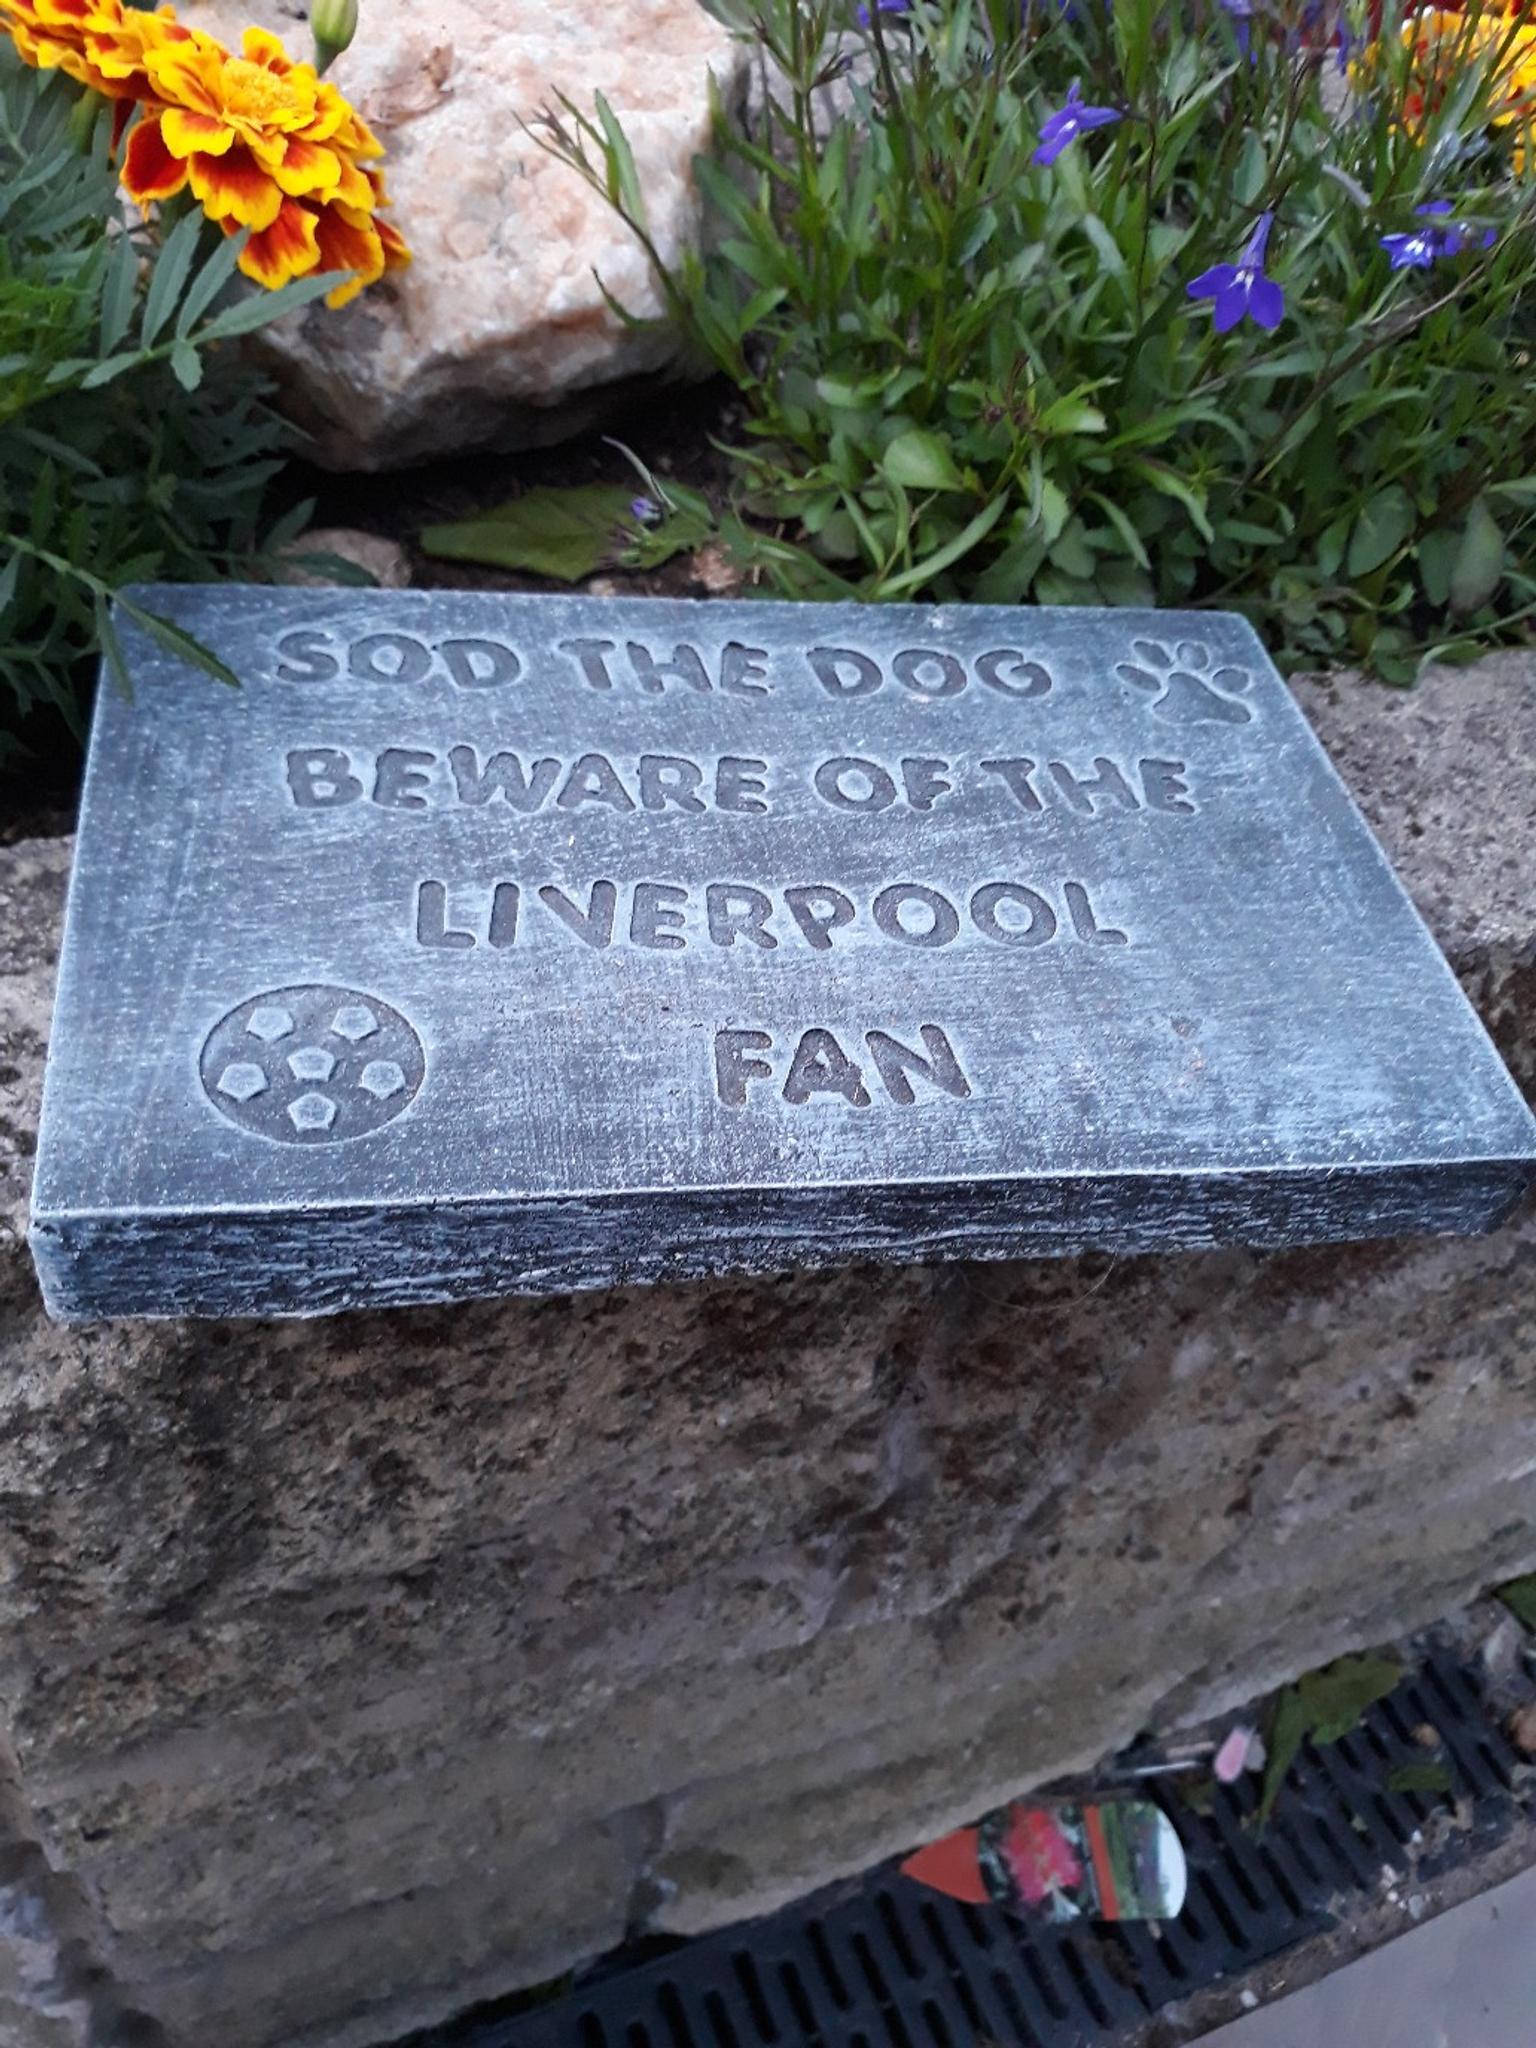 5 X Solid Stone Funny Garden Signs In L25 Liverpool Fur 6 00 Zum